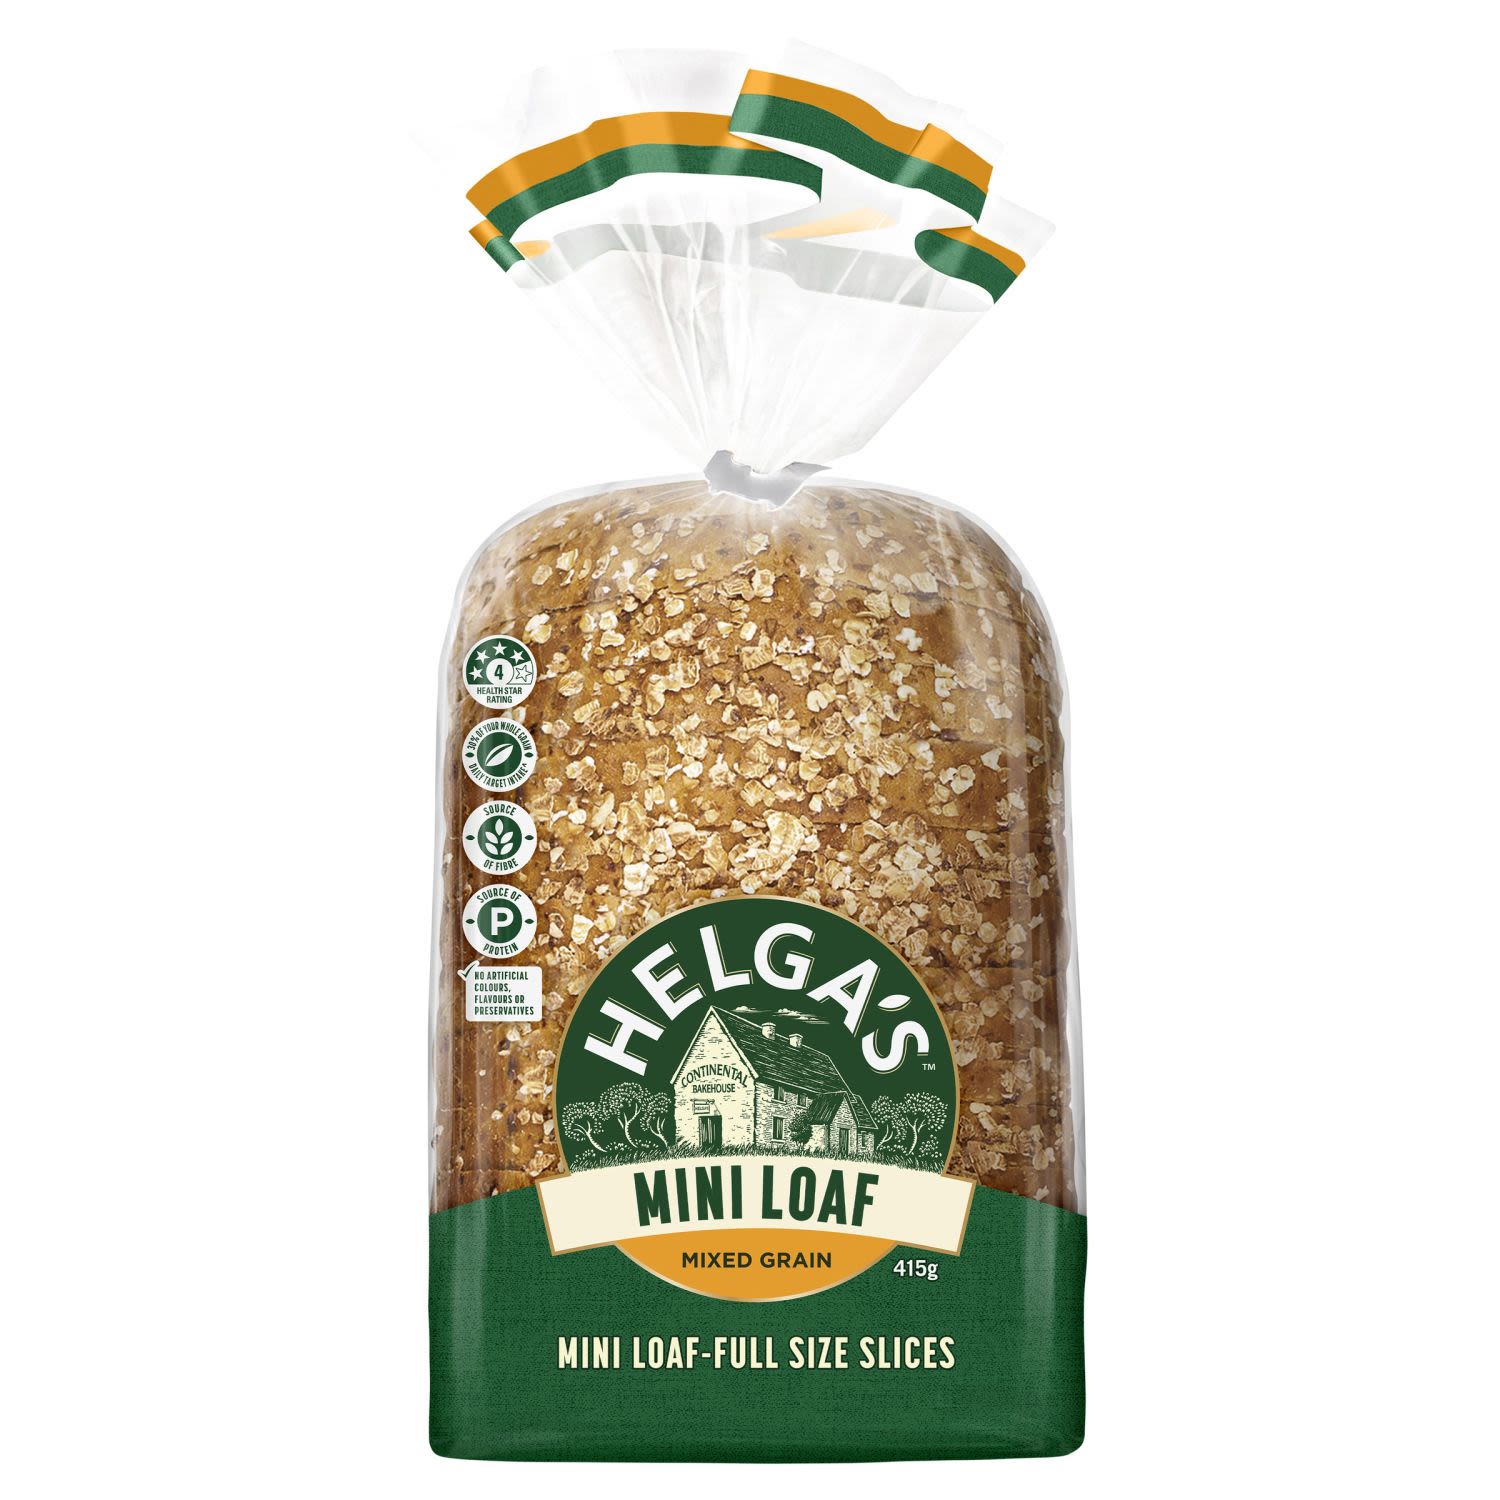 Helga's Traditional Mixed Grain Sliced Bread Mini Loaf, 415 Gram